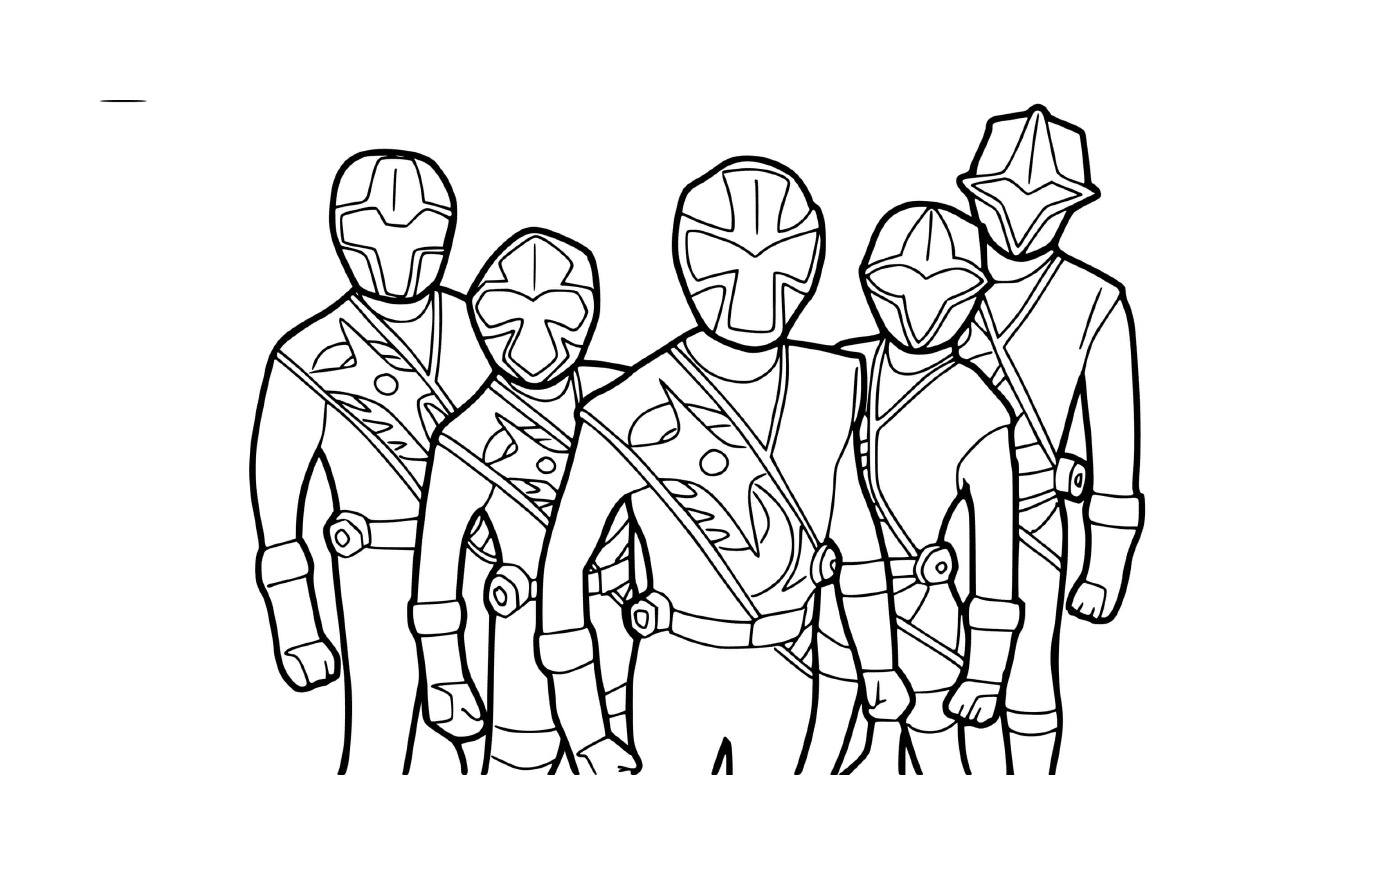  Power Rangers Steel - Team ninja 